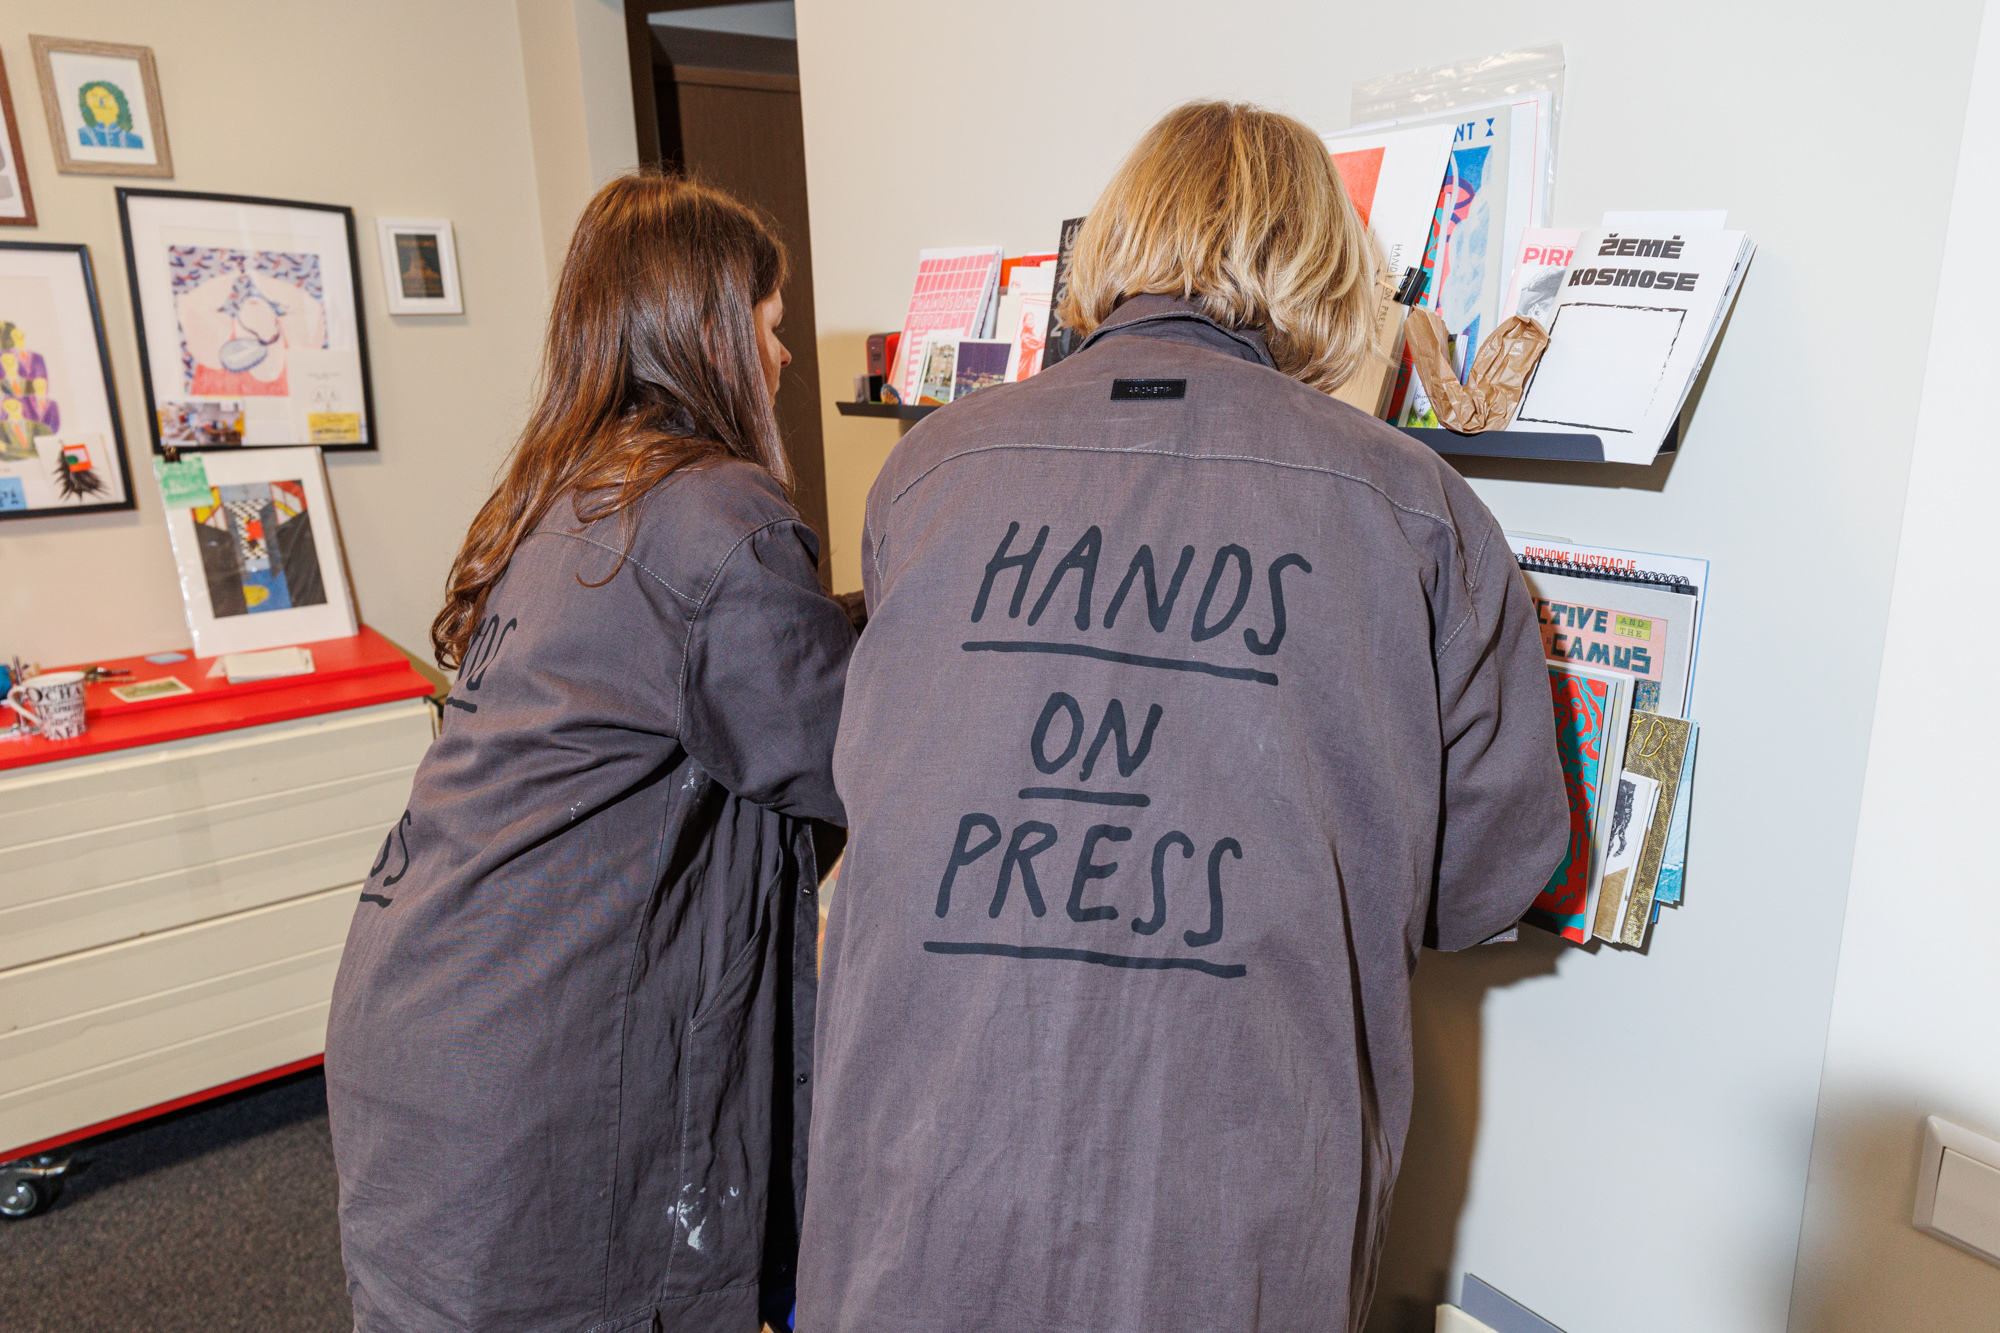 Hands on press spauda